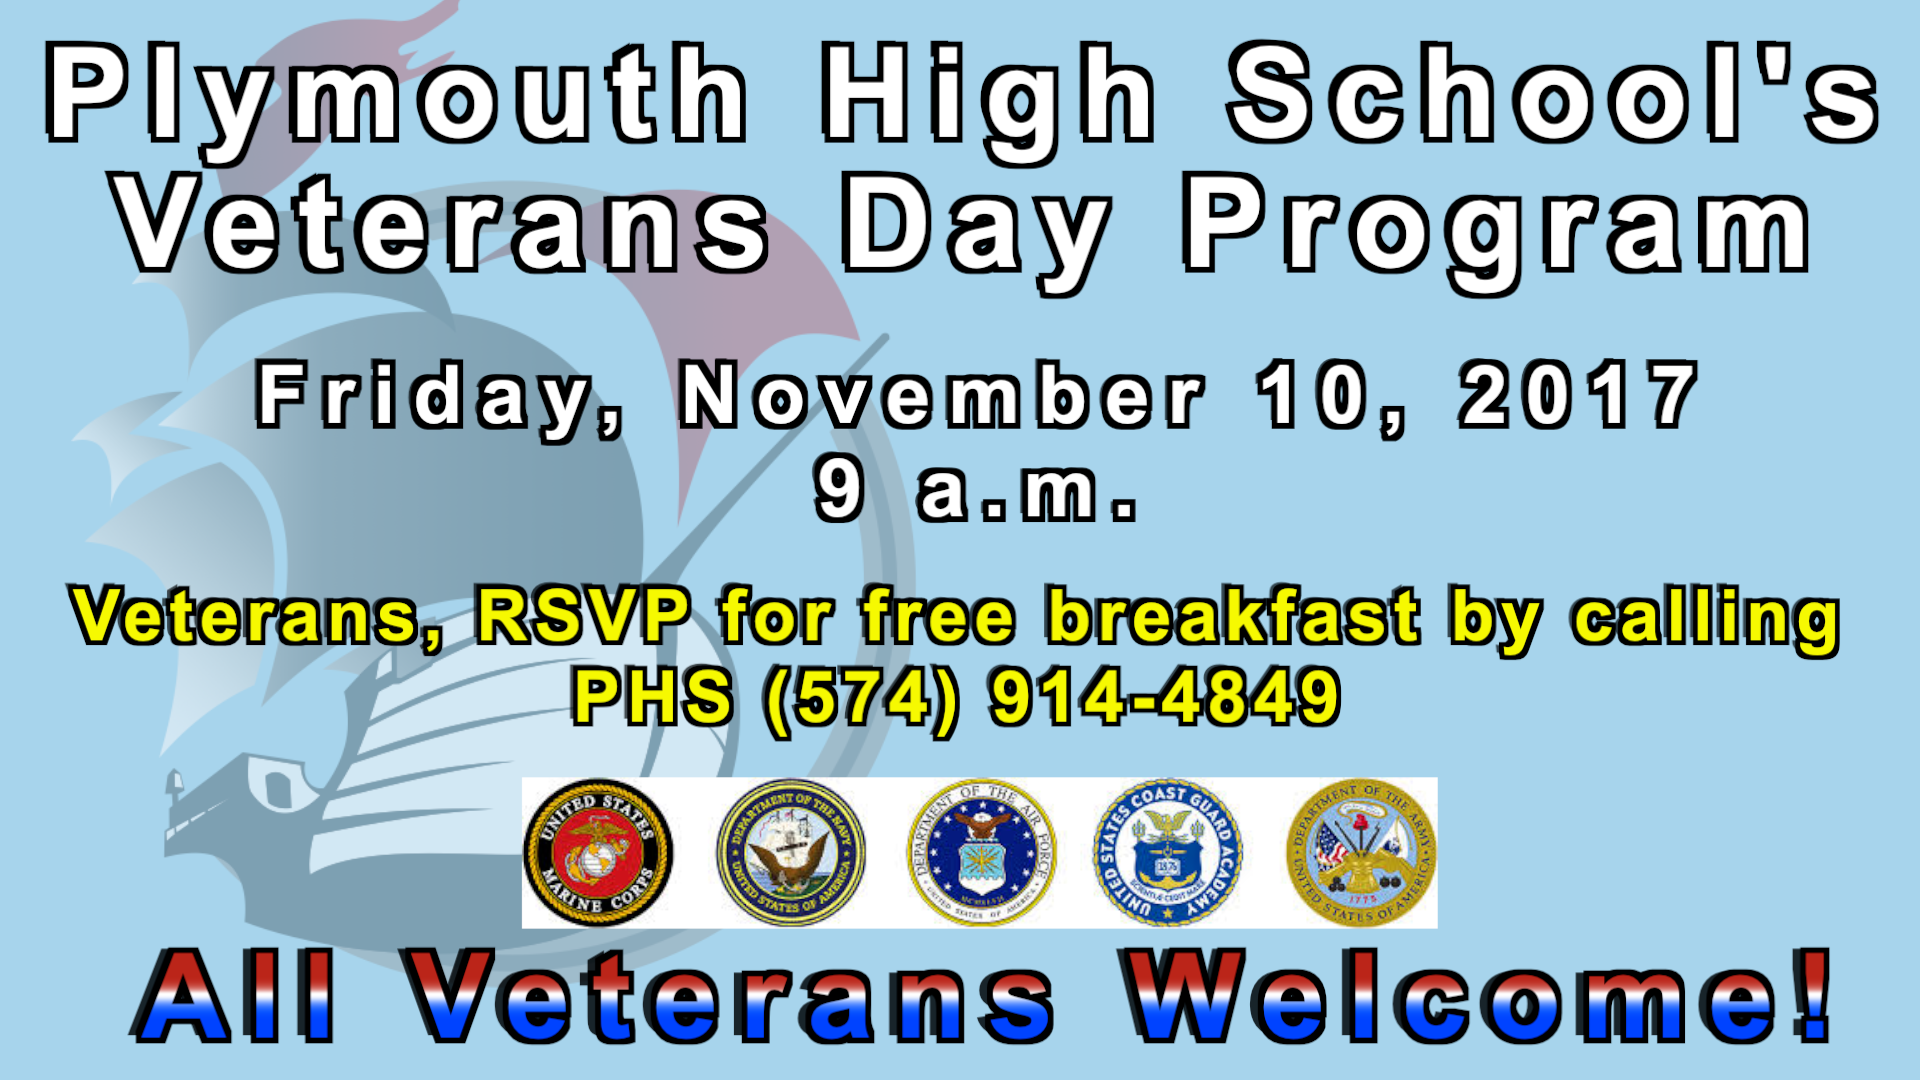 Veterans Day Program at Plymouth High School November 10, 2017